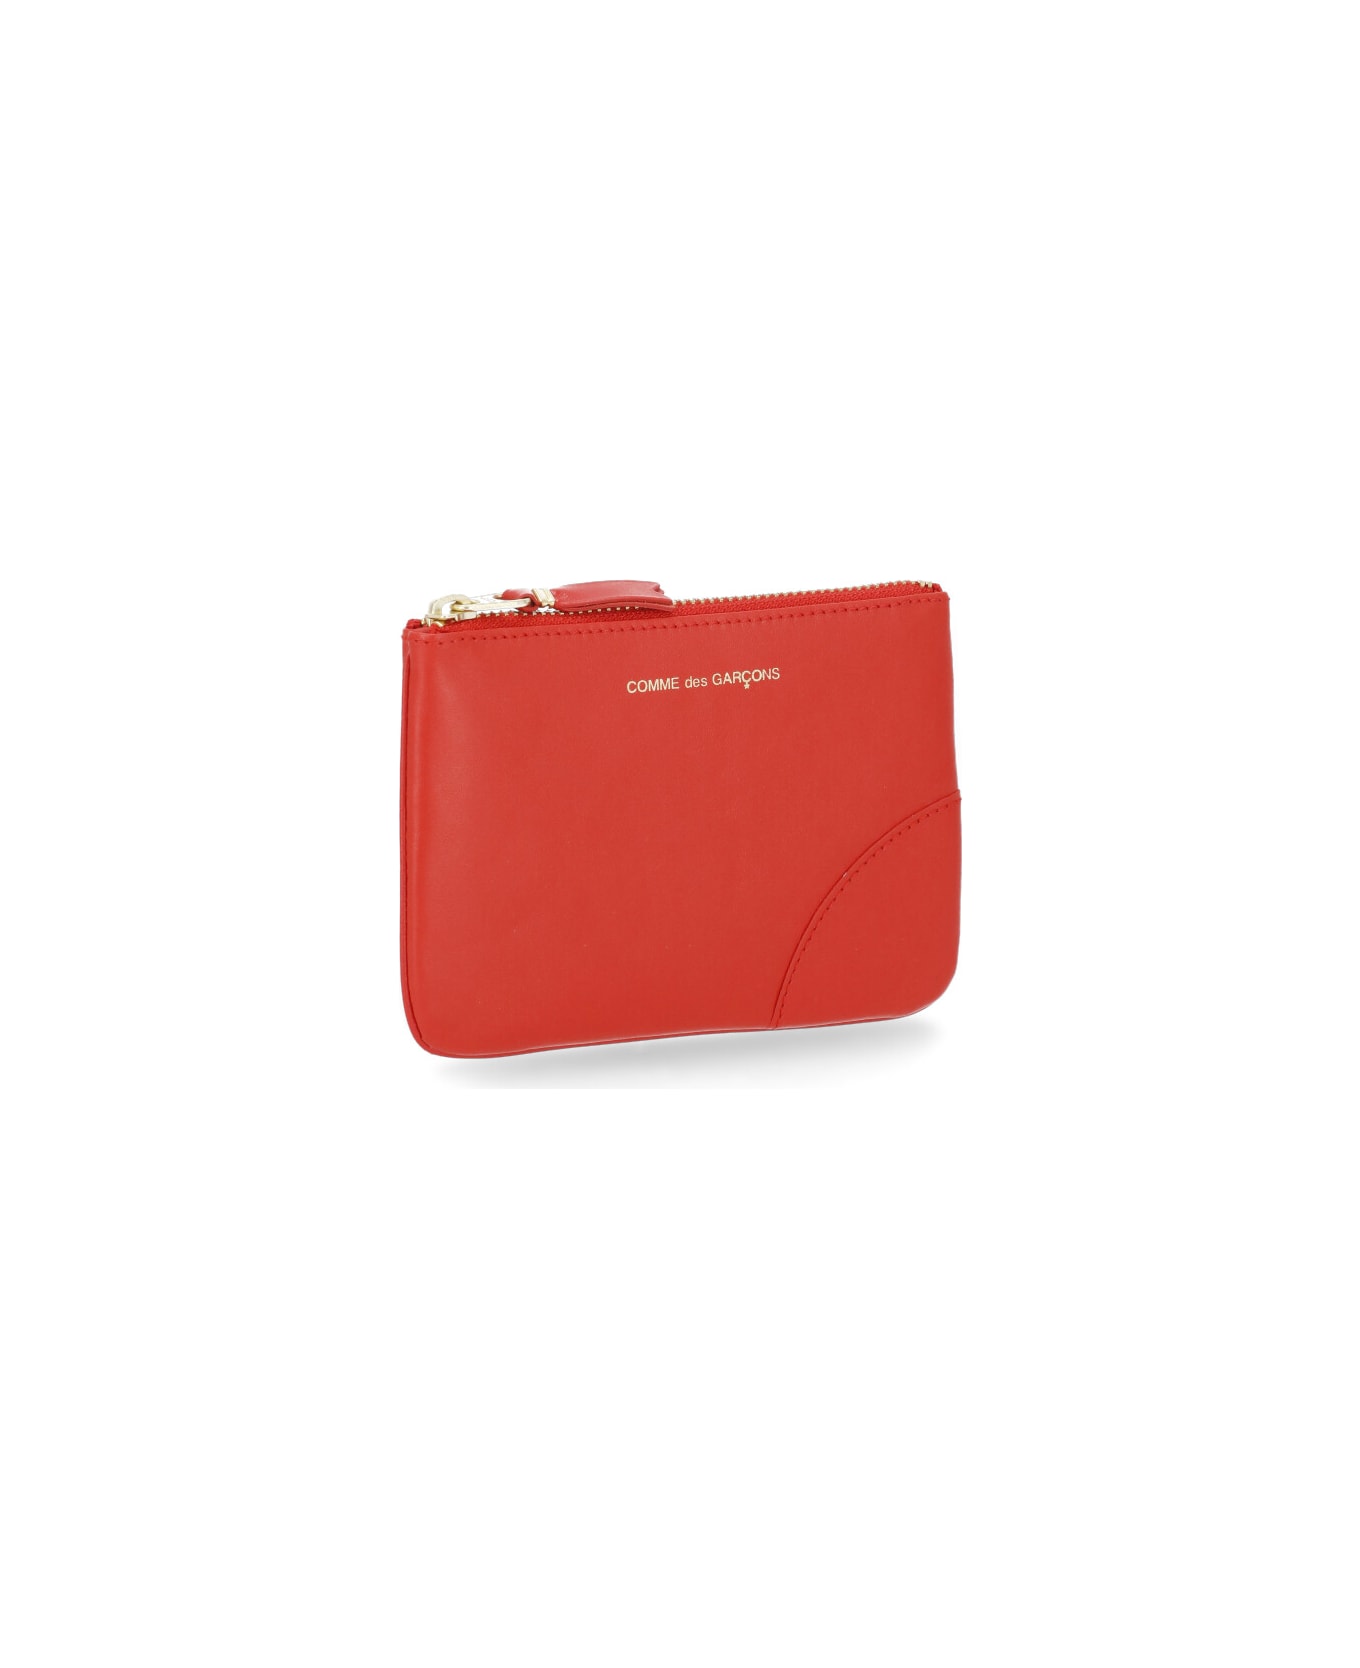 Comme des Garçons Wallet Wallet With Logo - Red